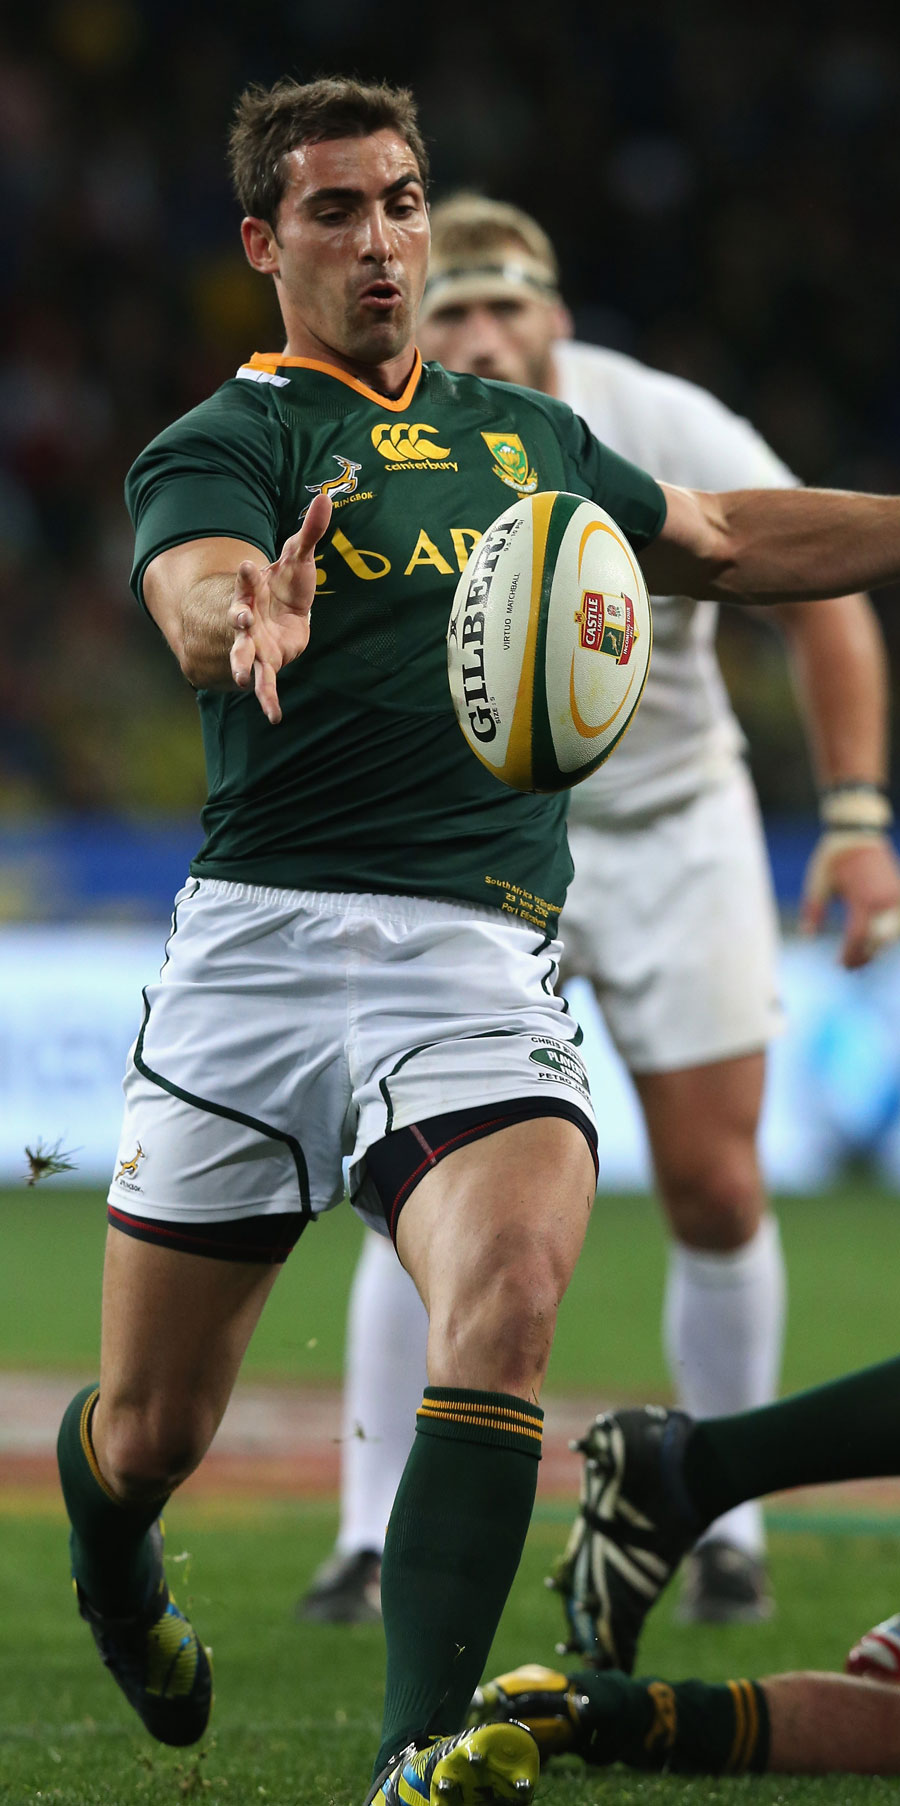 South Africa's Ruan Pienaar clears the ball 